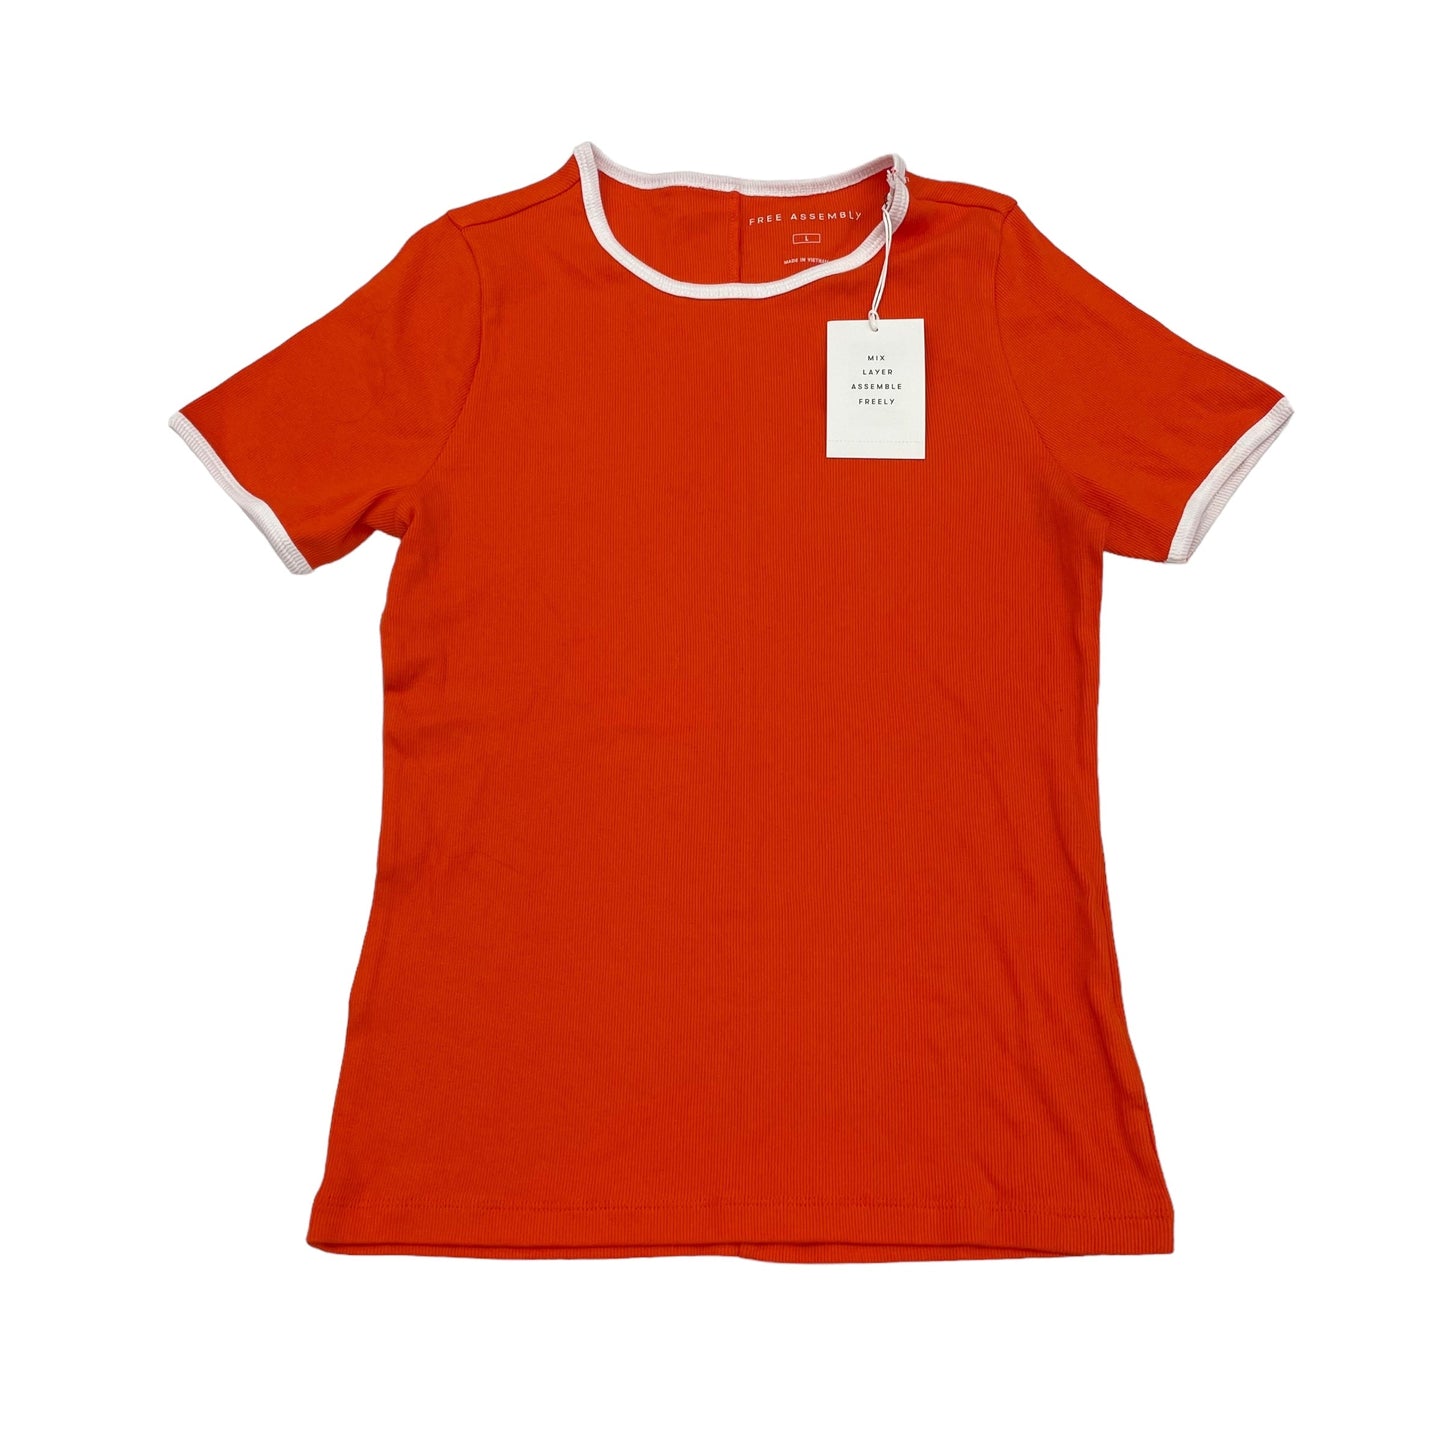 Orange Top Short Sleeve Free Assembly, Size L